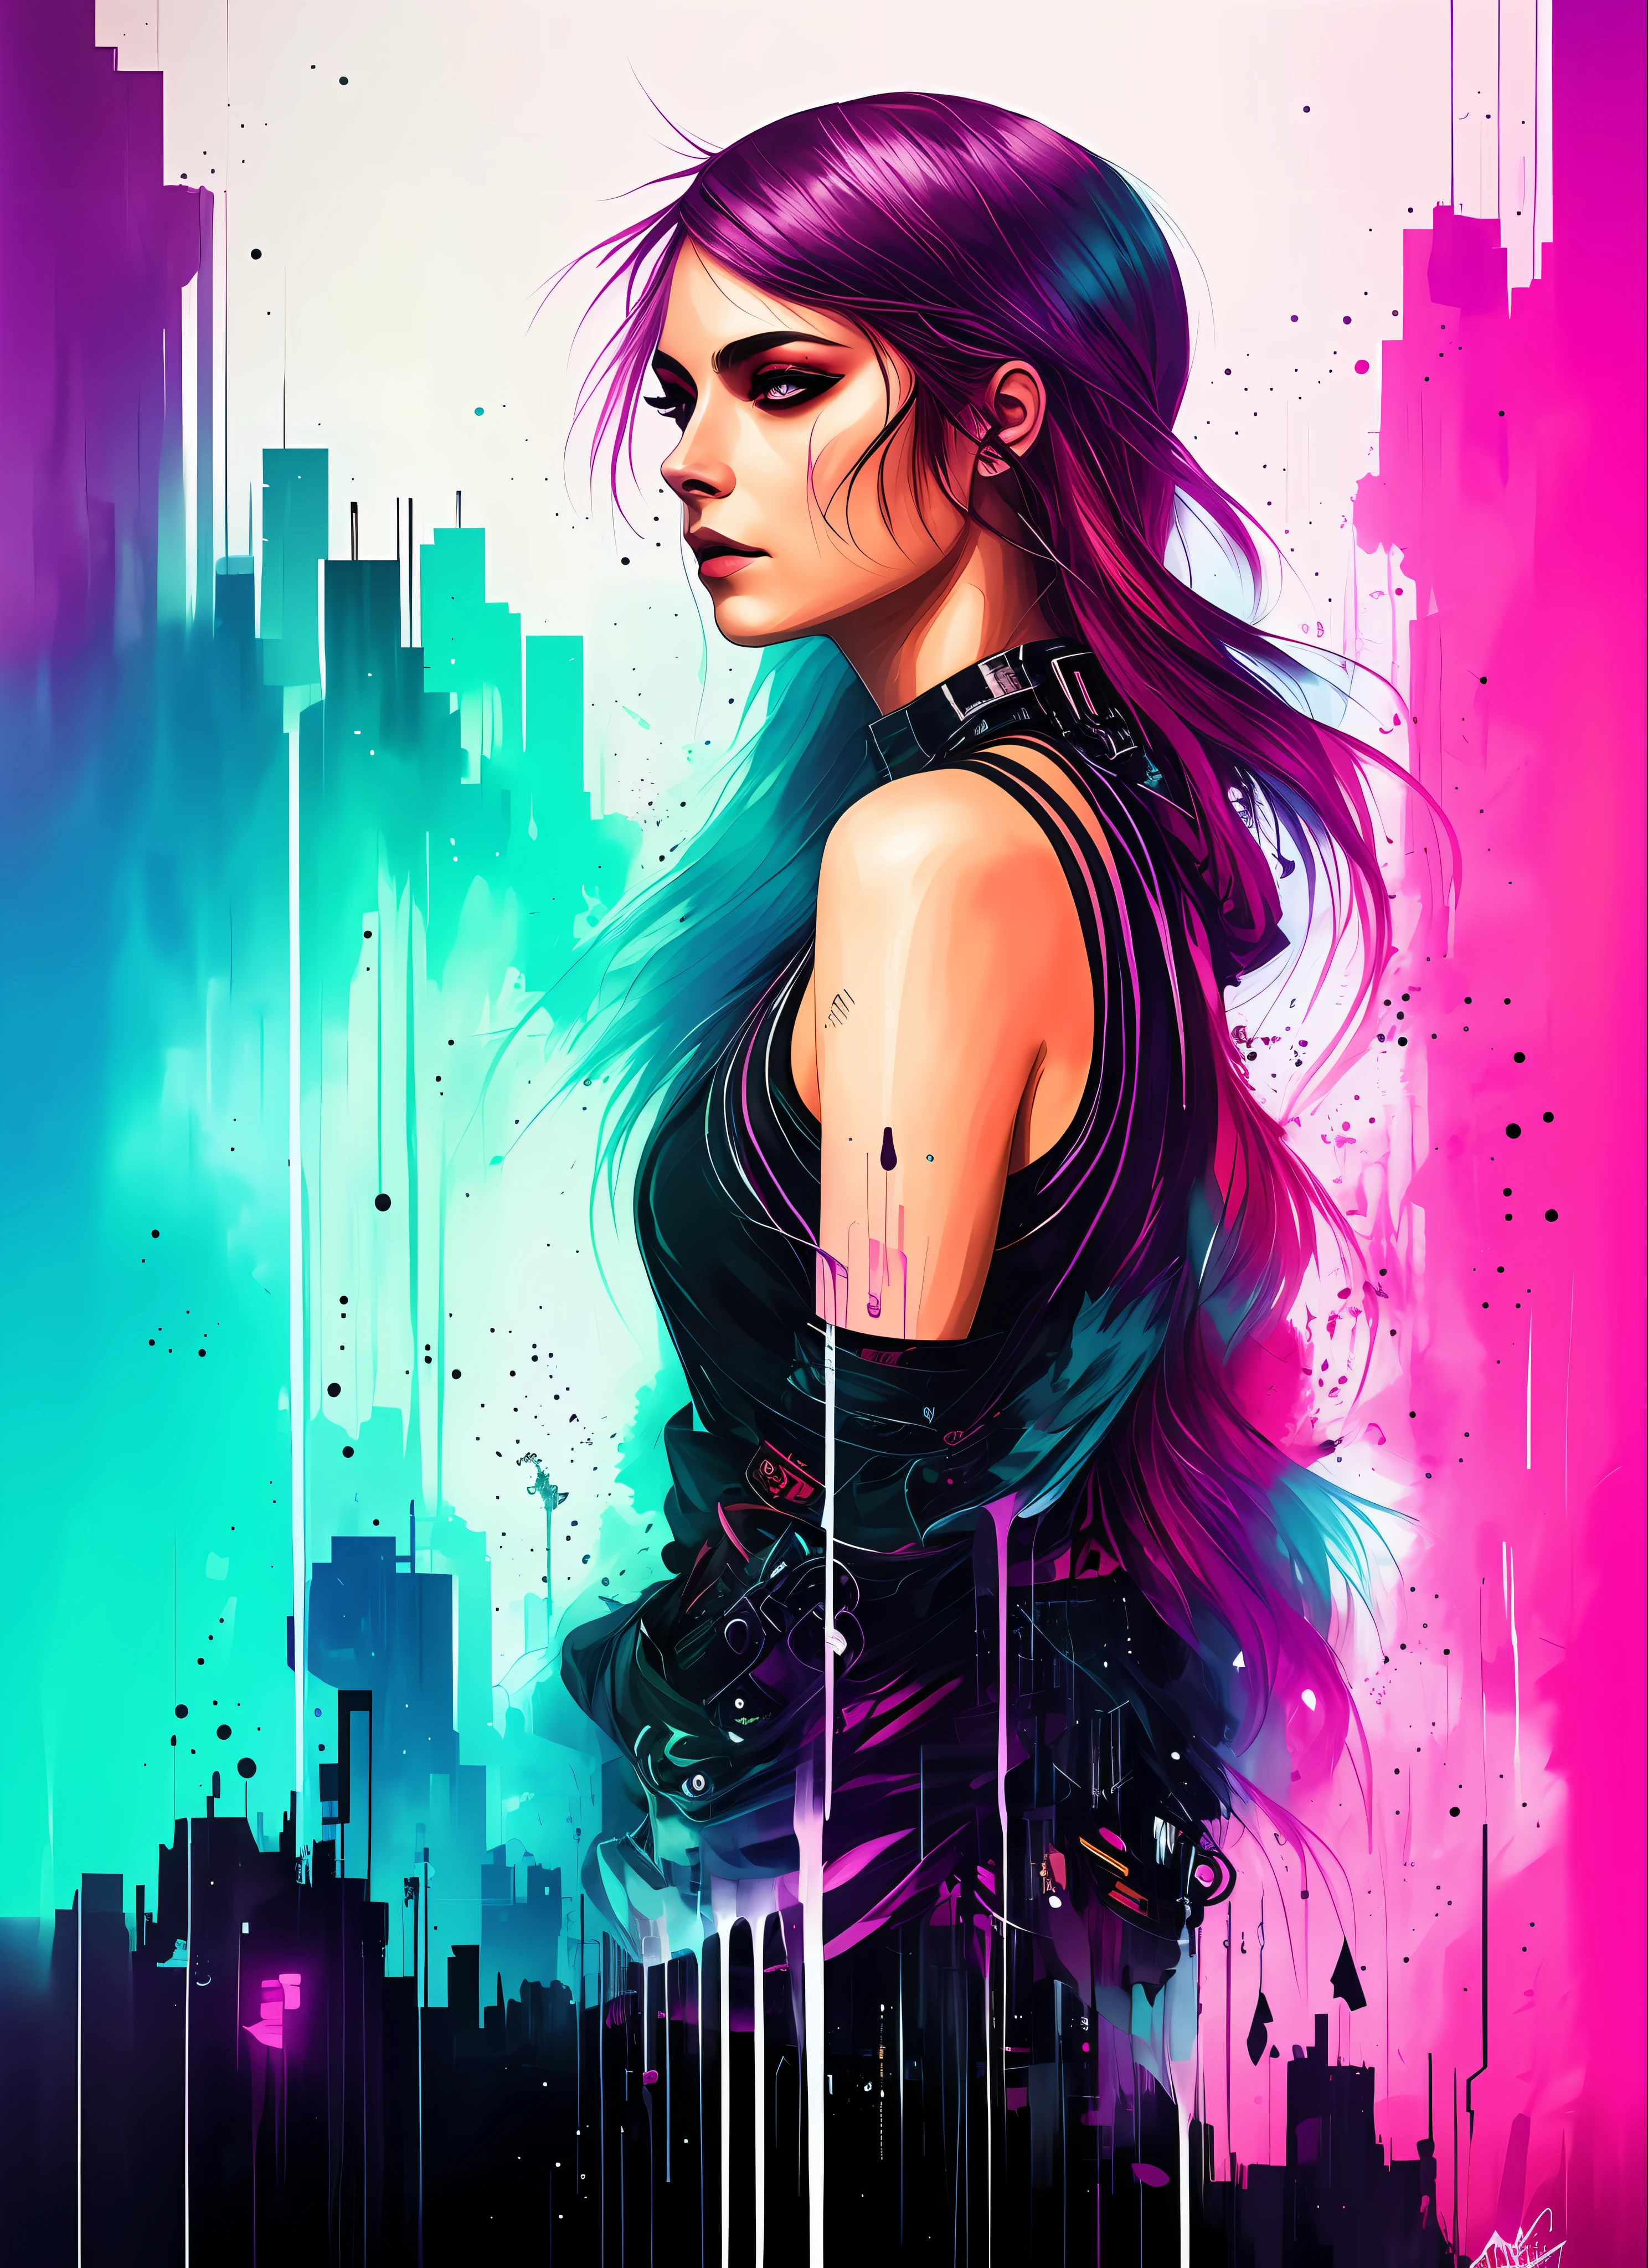 Mulher synthwavea estilo swpunk por Agnes Cecile, design luminoso, cores néon, gotas de tinta, luzes da cidade cyberpunk